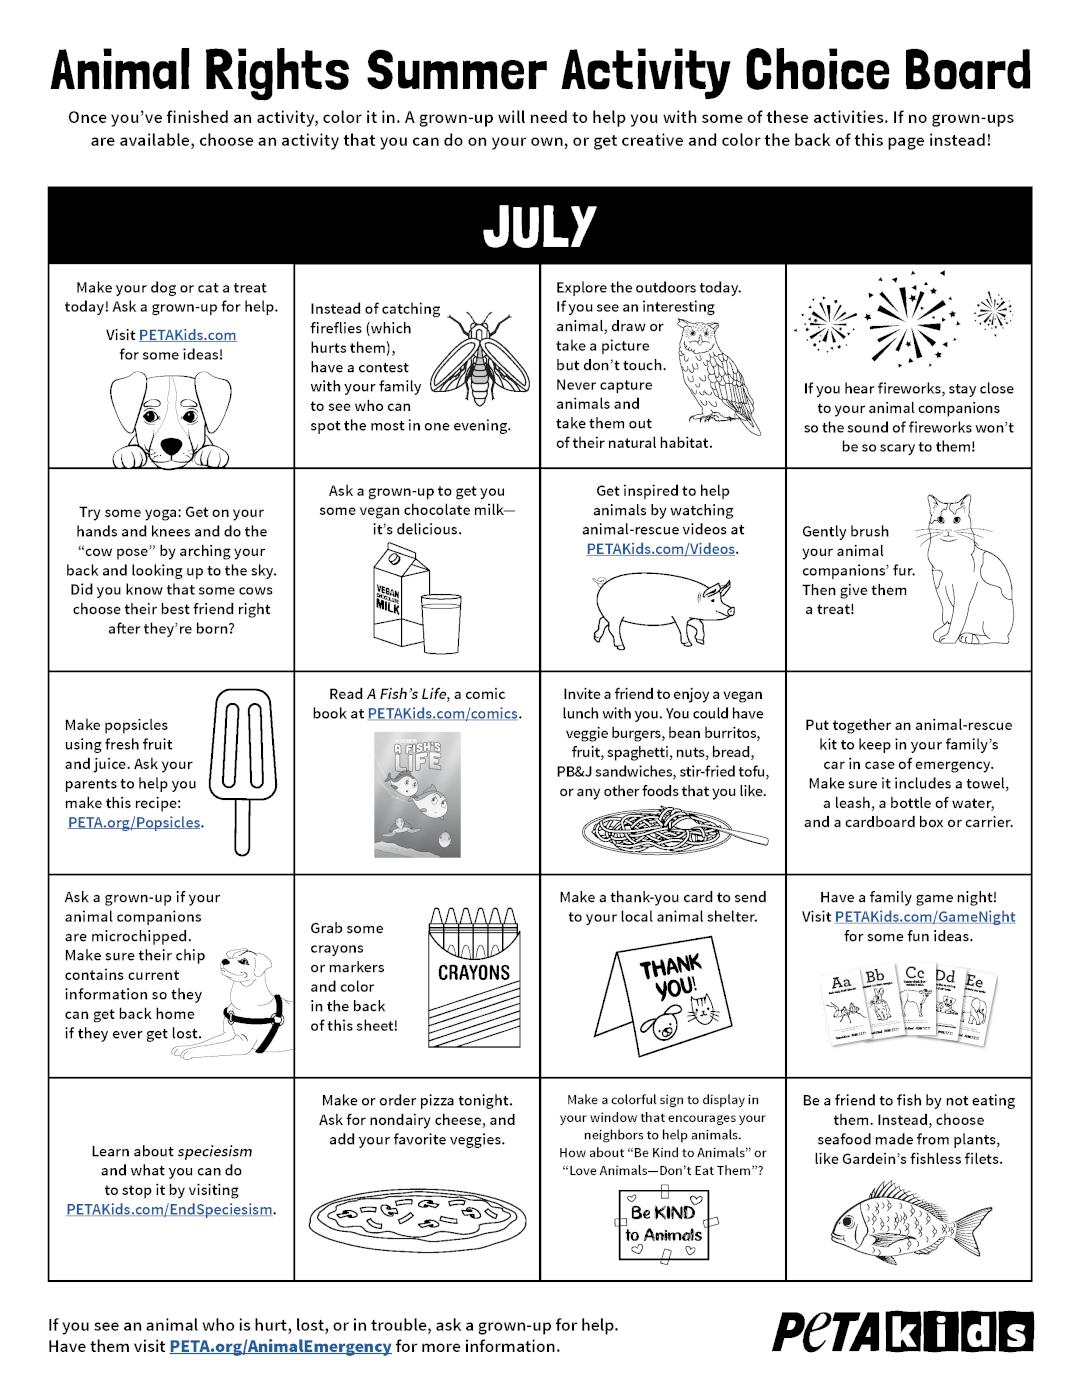 July summer activity choice board